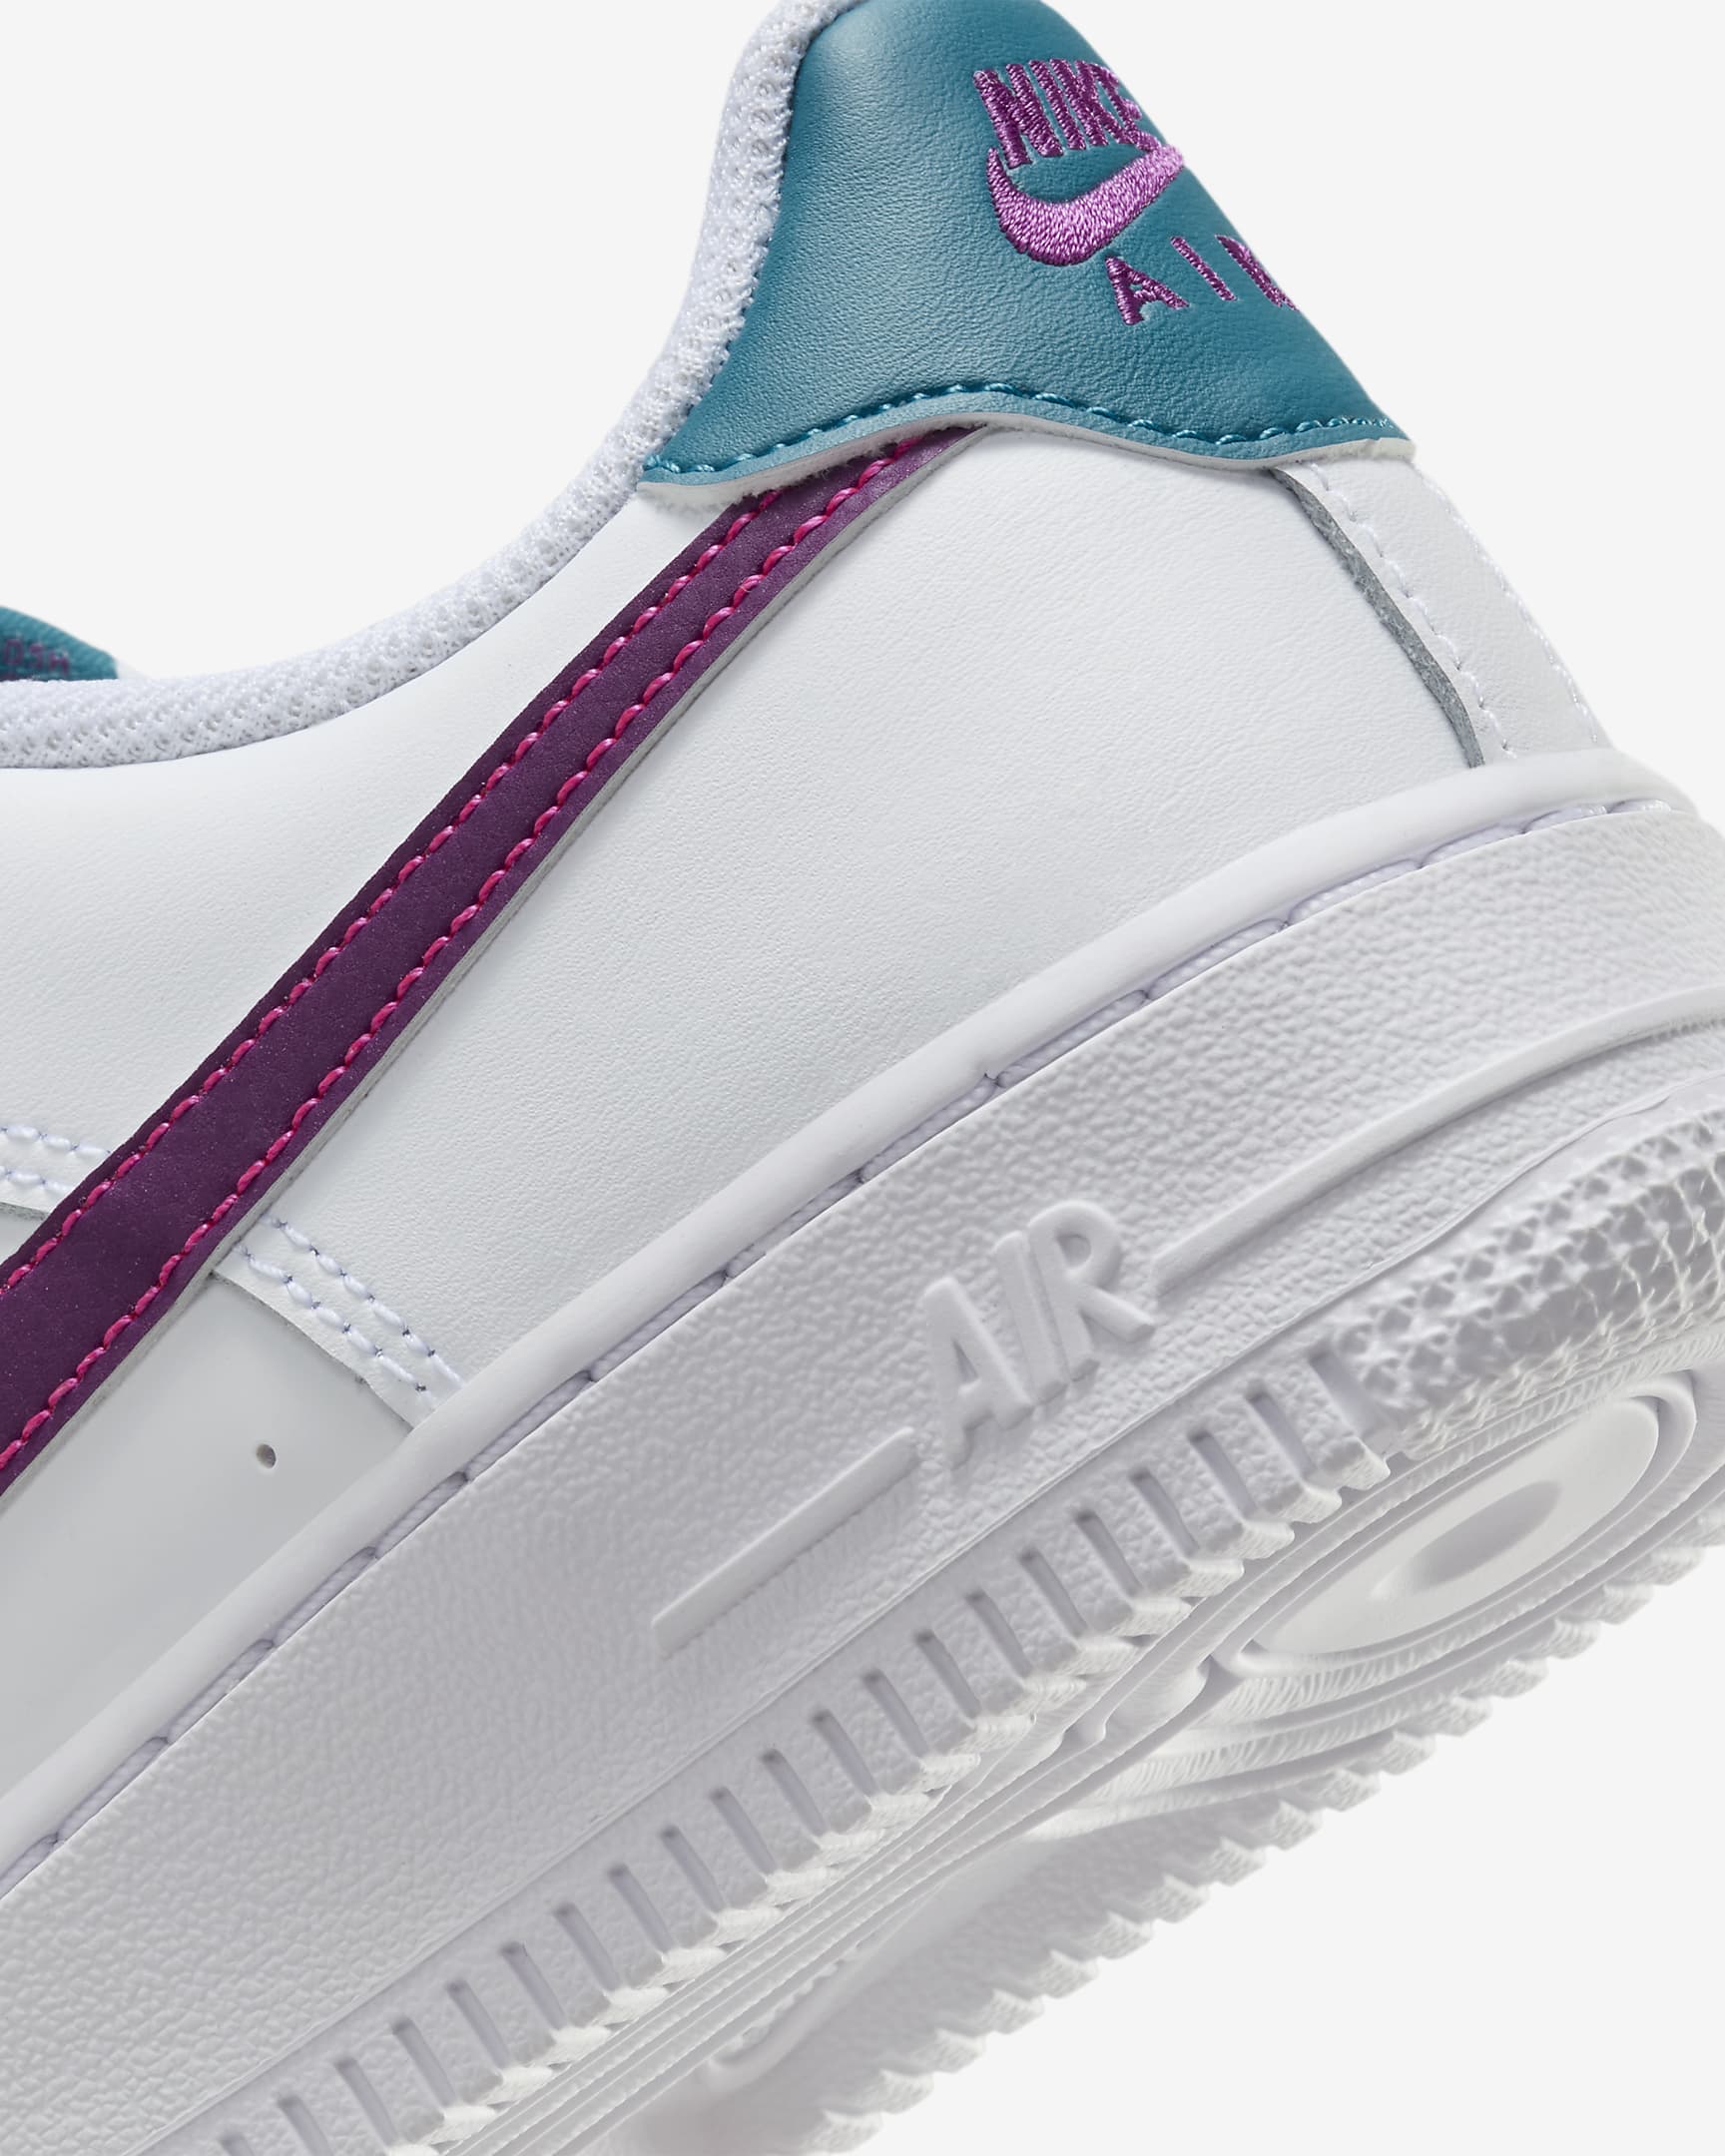 Nike Air Force 1 Older Kids' Shoes - White/Hyper Pink/Aquamarine/Viotech